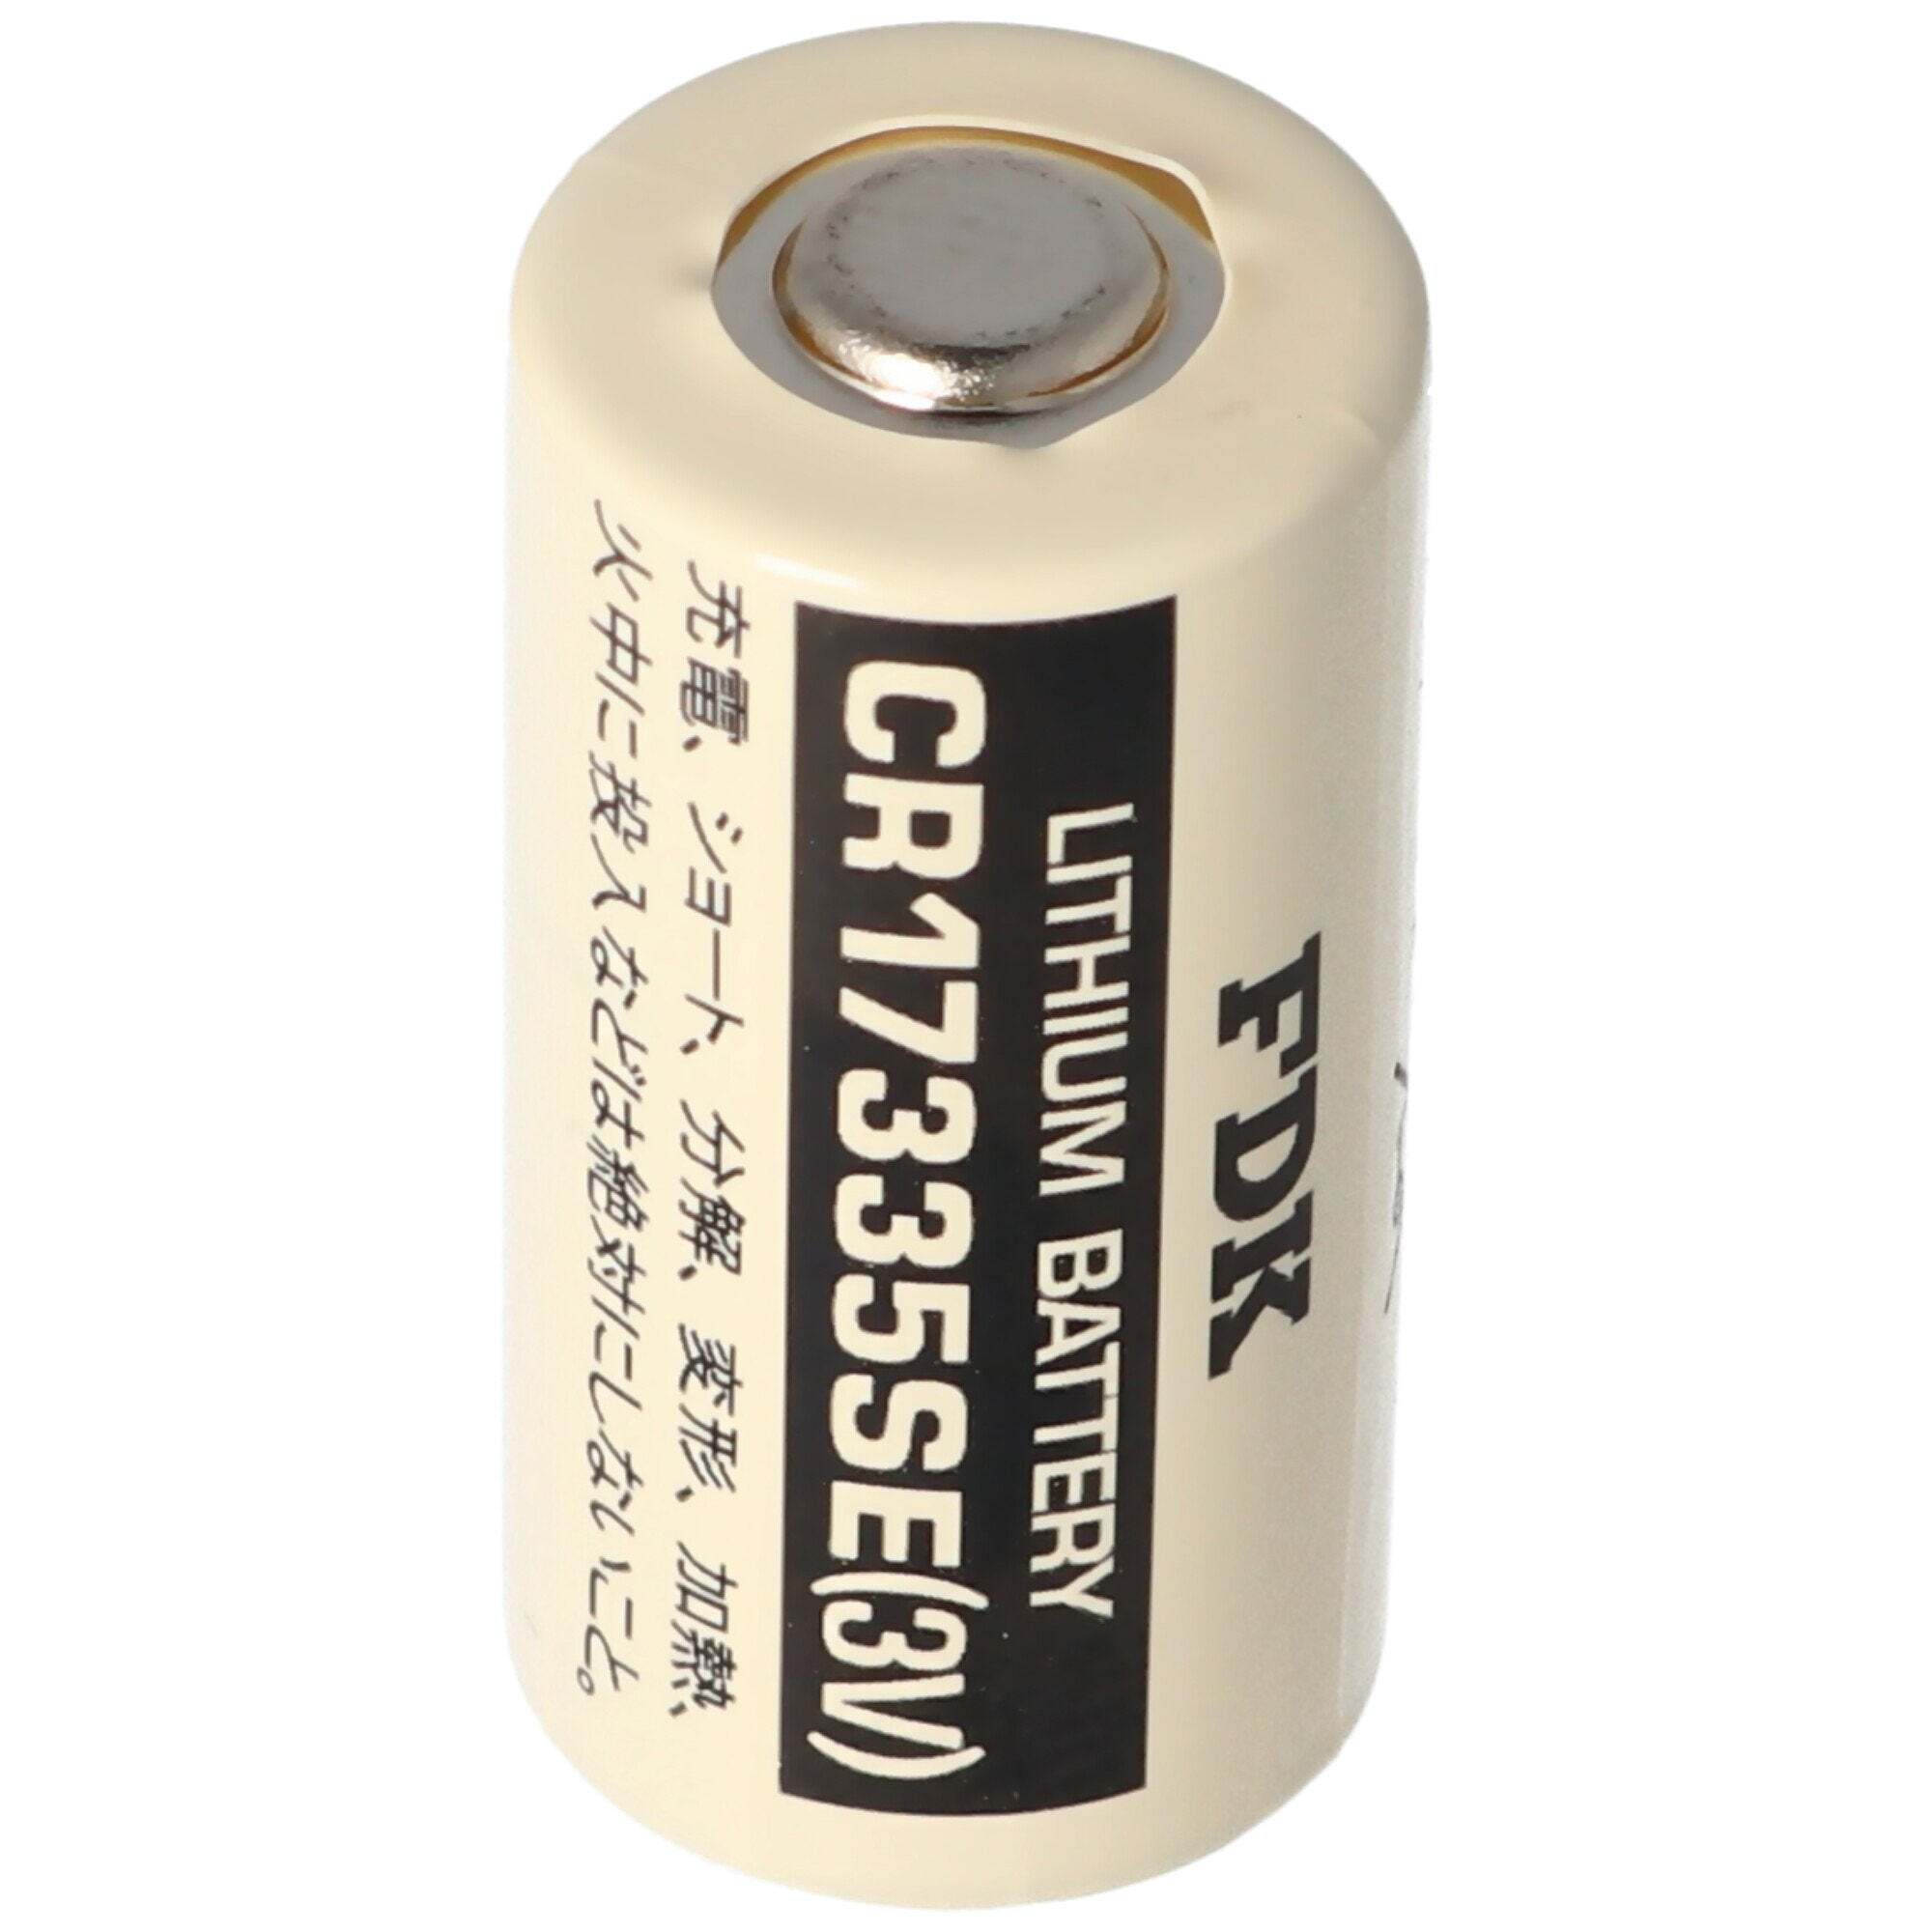 FDK (ehem. Sanyo) Sanyo lithiumbatterij CR17335 SE maat 2 / 3A, zonder soldeerlabels CR17335SE